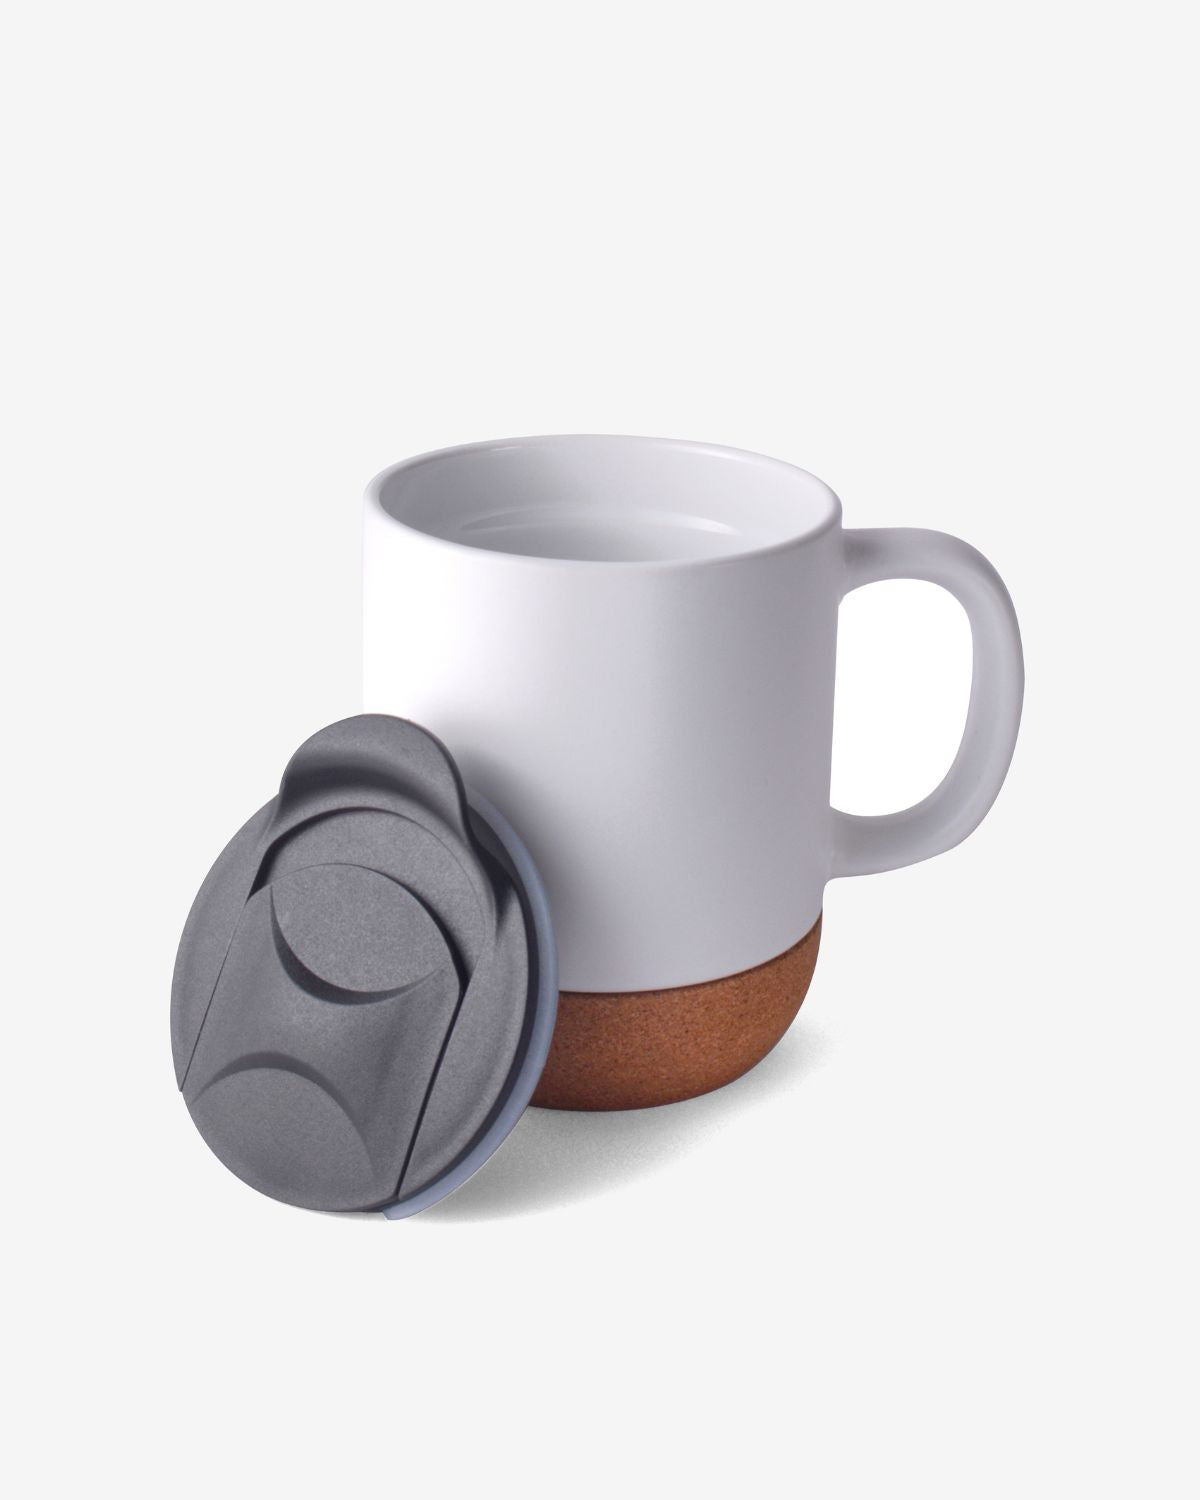 Corg ceramic coffee mug